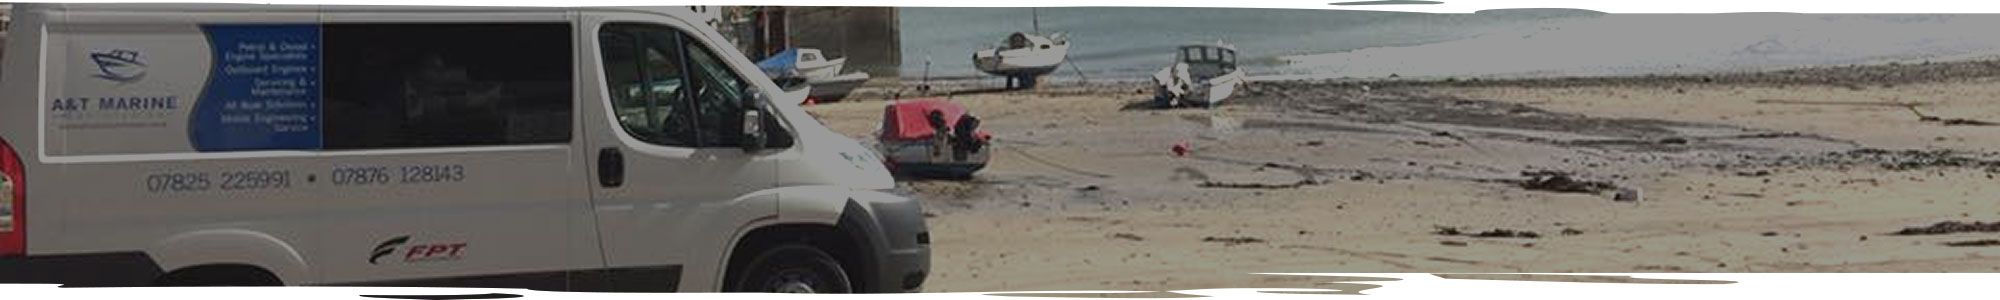 A&T Marine Engineering van on Anglesey beach